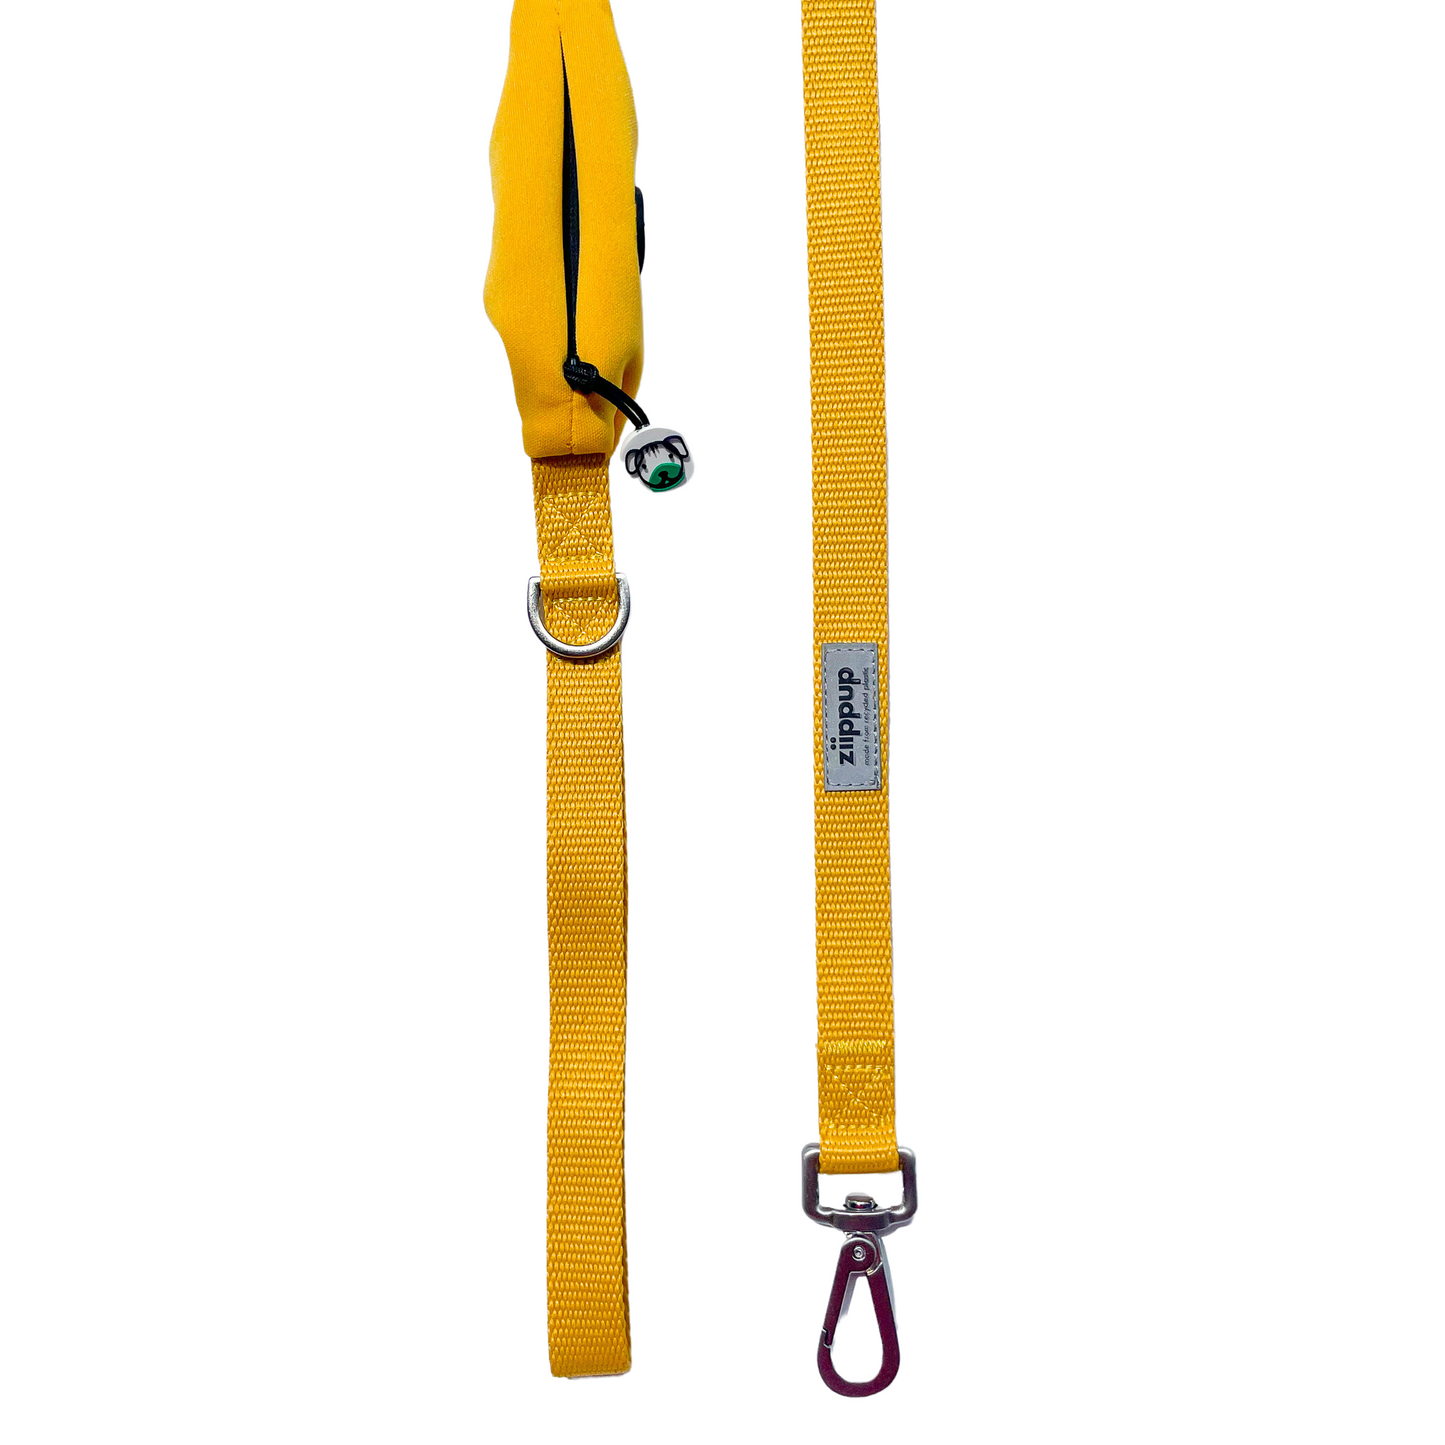 Closeup of Ziippup yellow dog leash